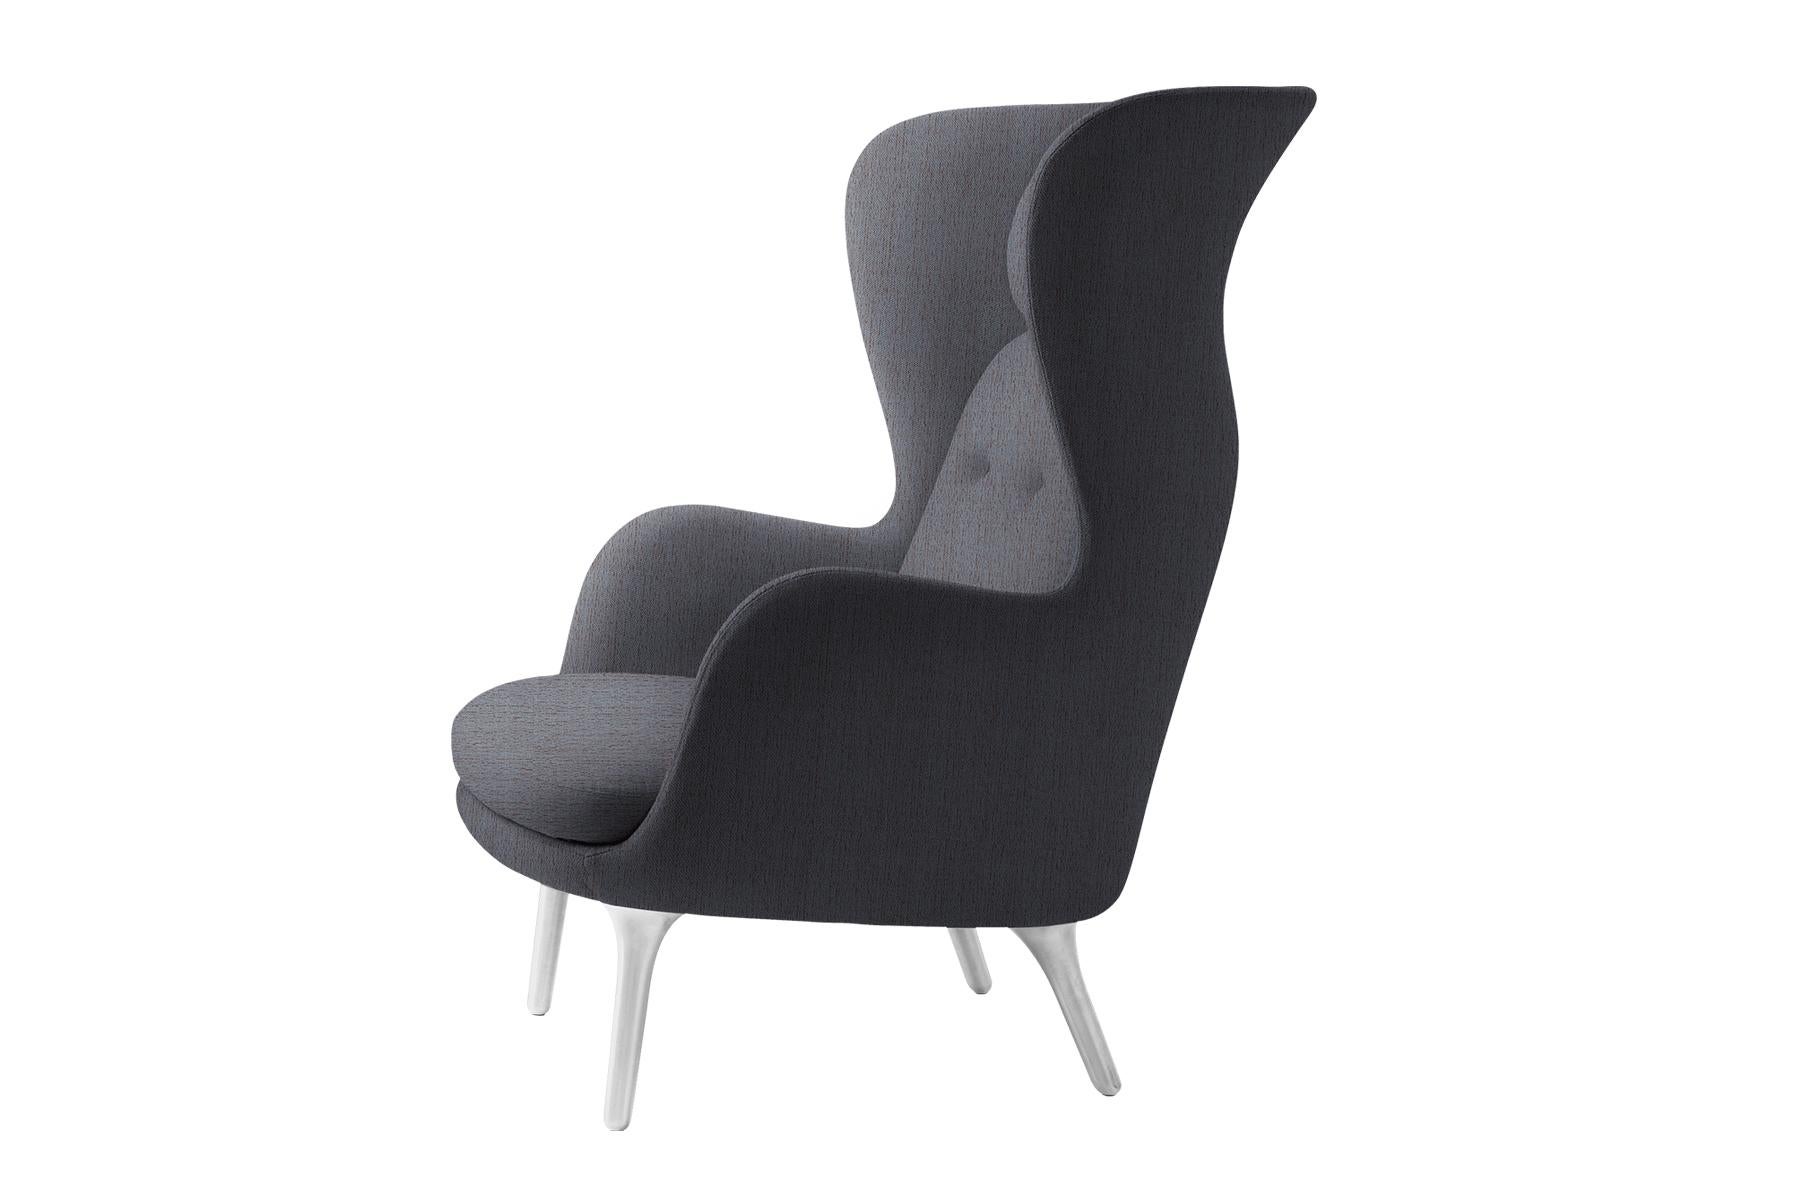 American Jaime Hayon Model Jh1 Ro Lounge Chair For Sale